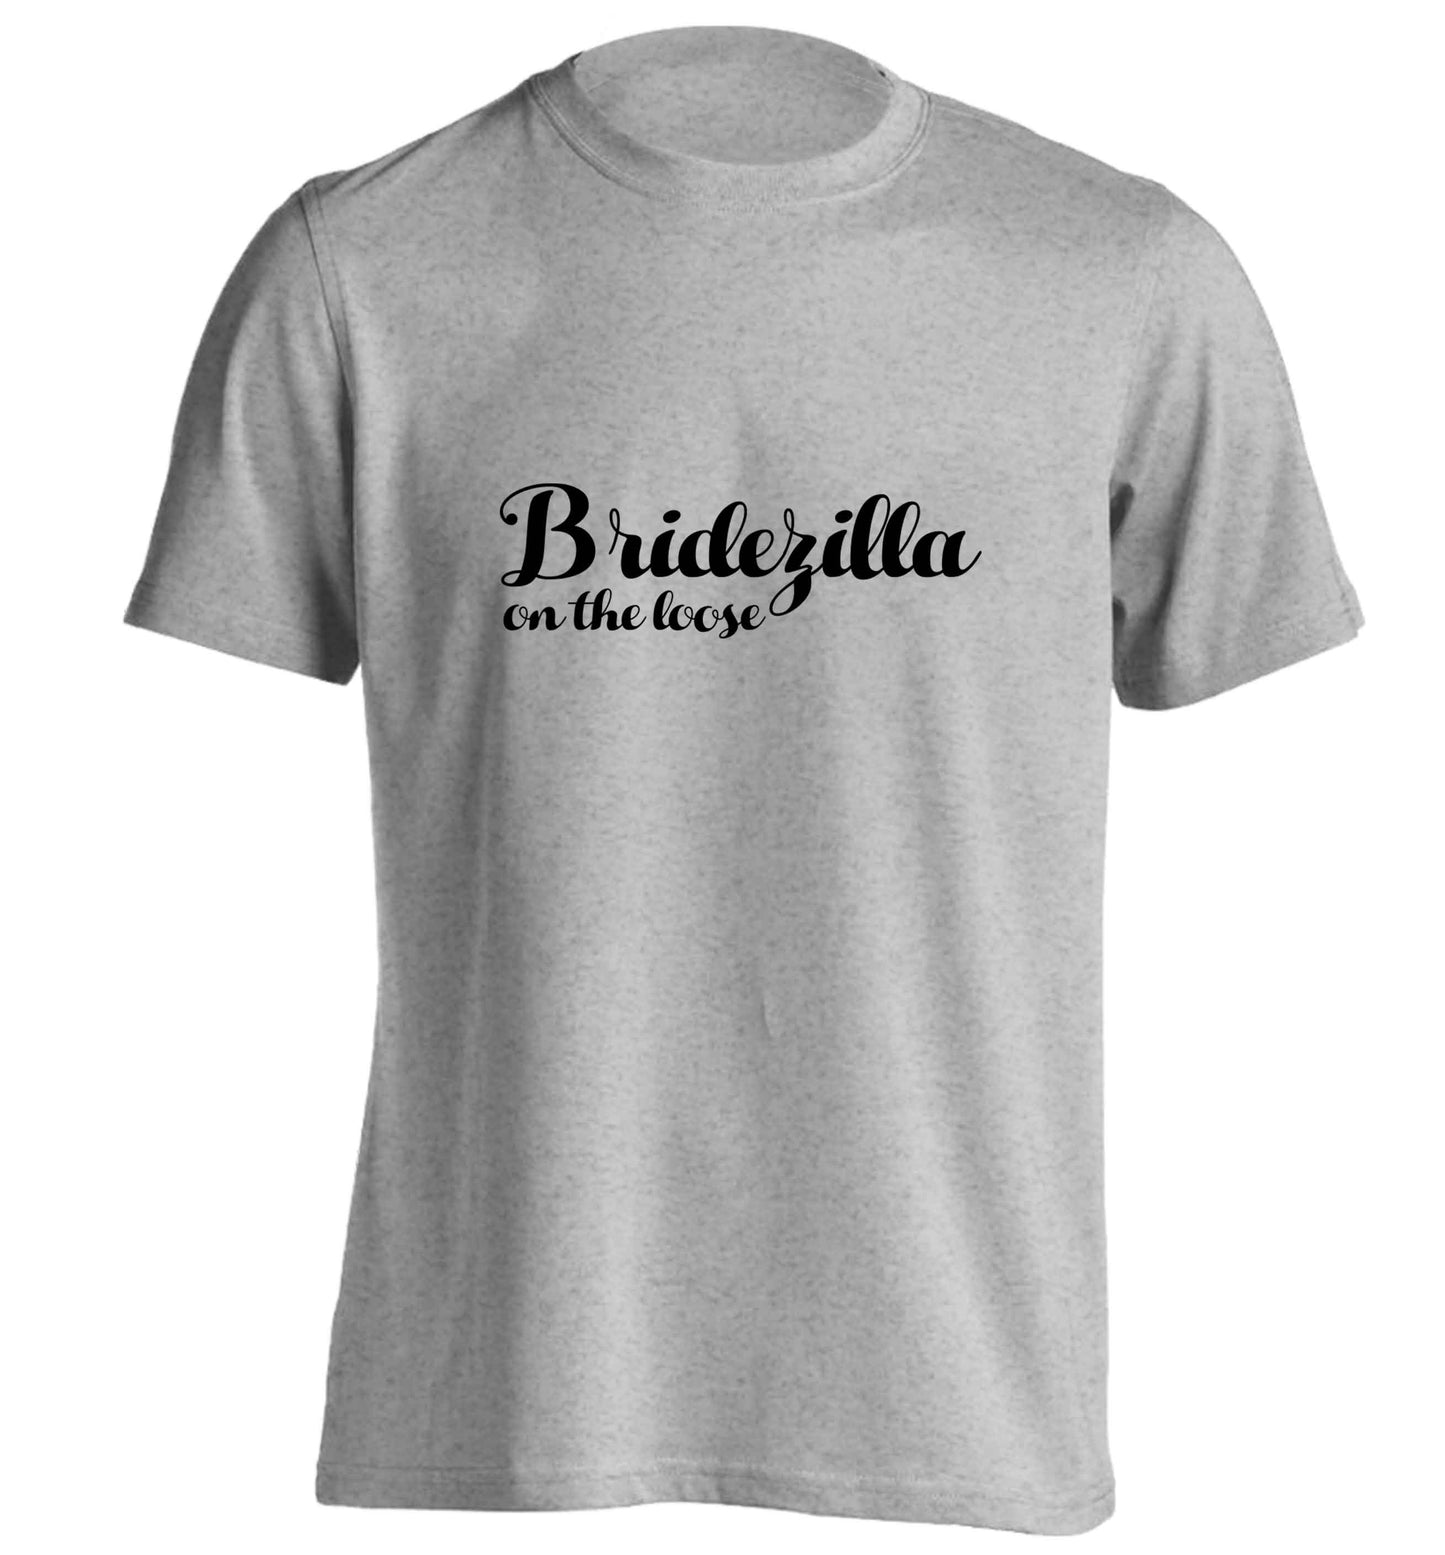 Bridezilla on the loose adults unisex grey Tshirt 2XL